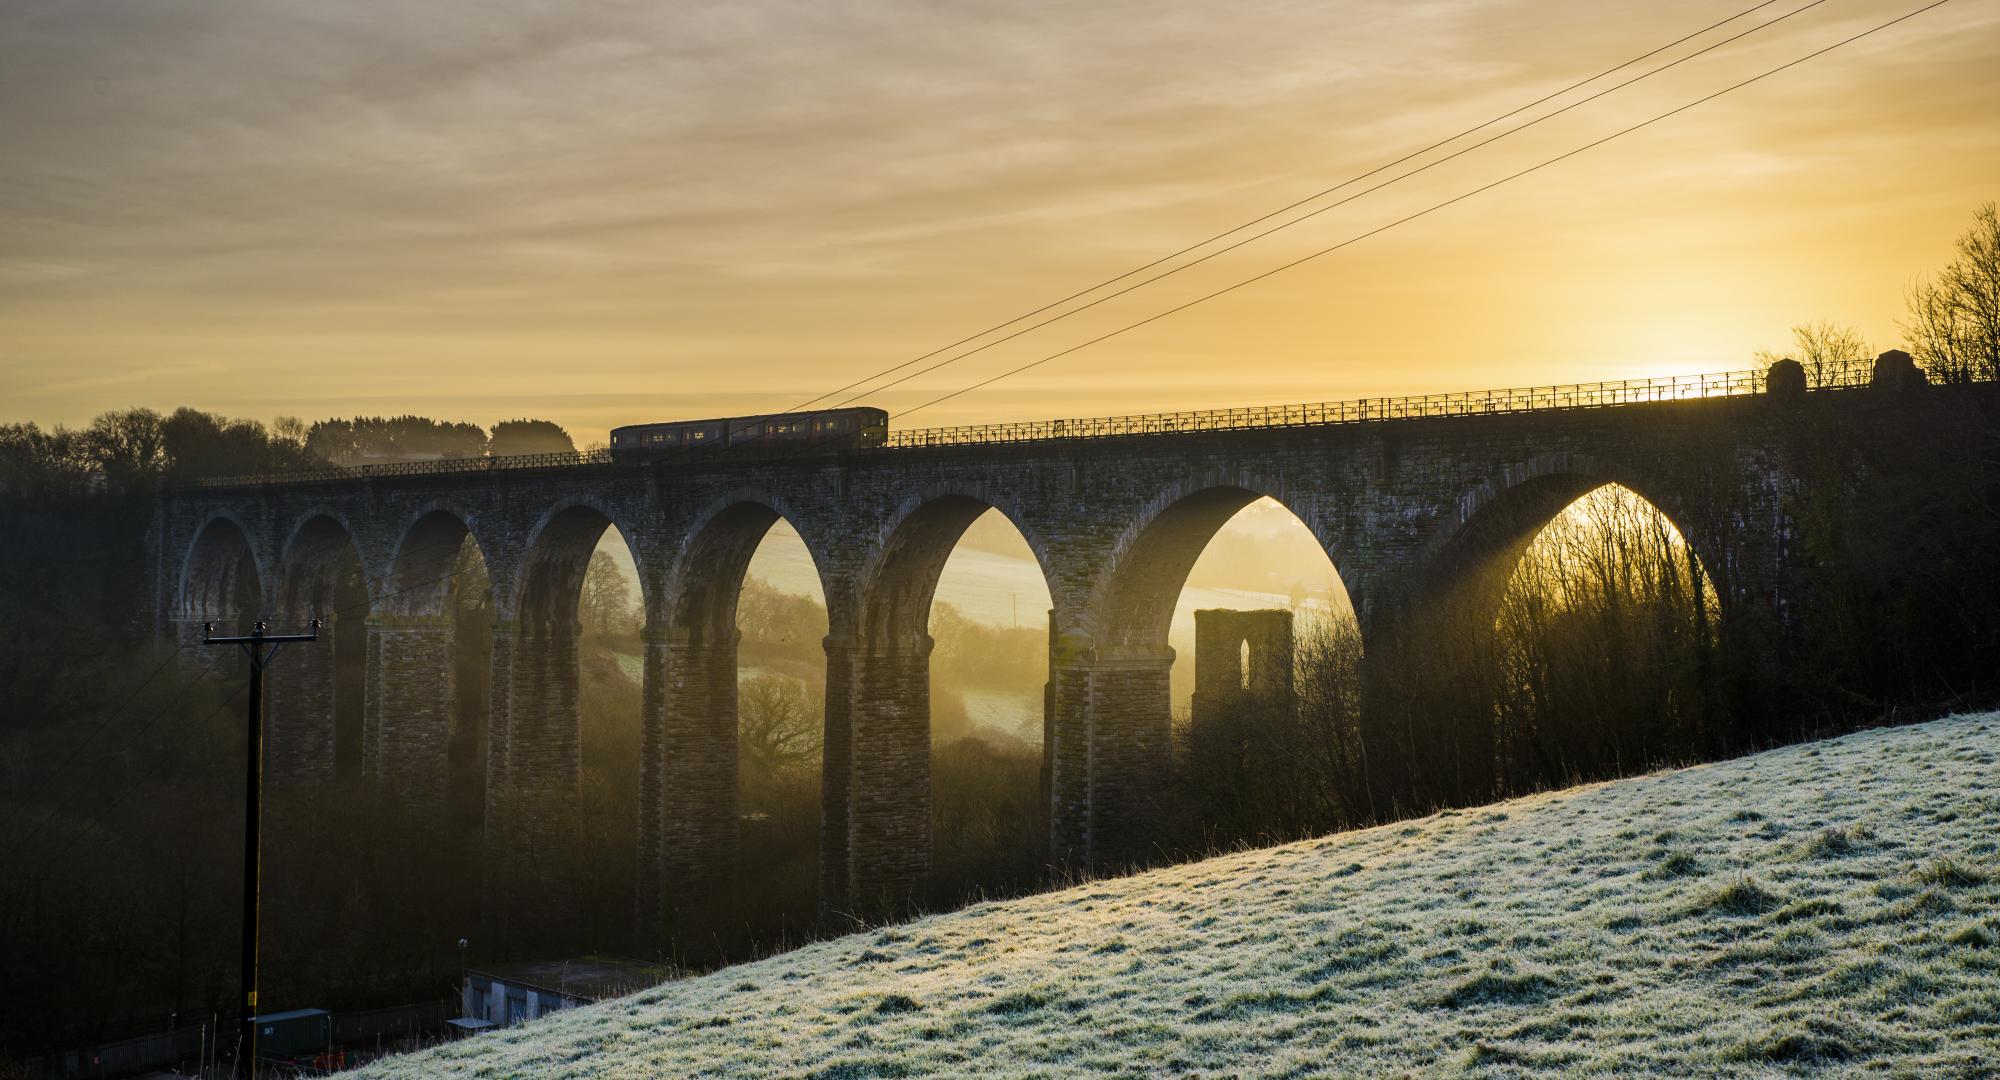 Moorswater viaduct at sunrise on a beautiful winter morning, Cornwall, UK, via Istock 